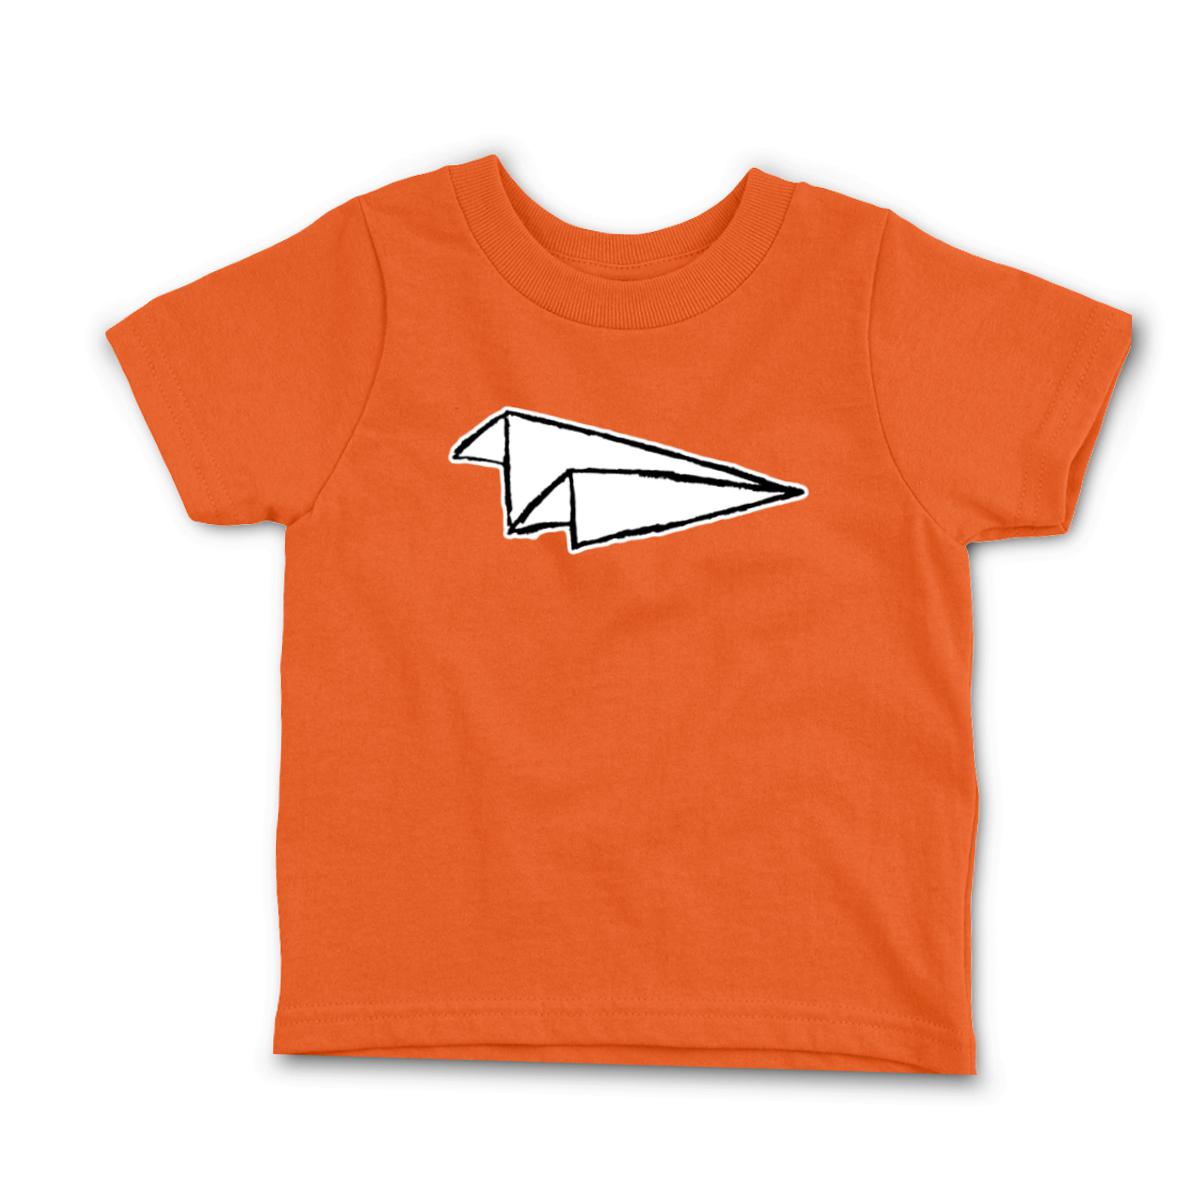 Airplane Sketch Infant Tee 18M orange